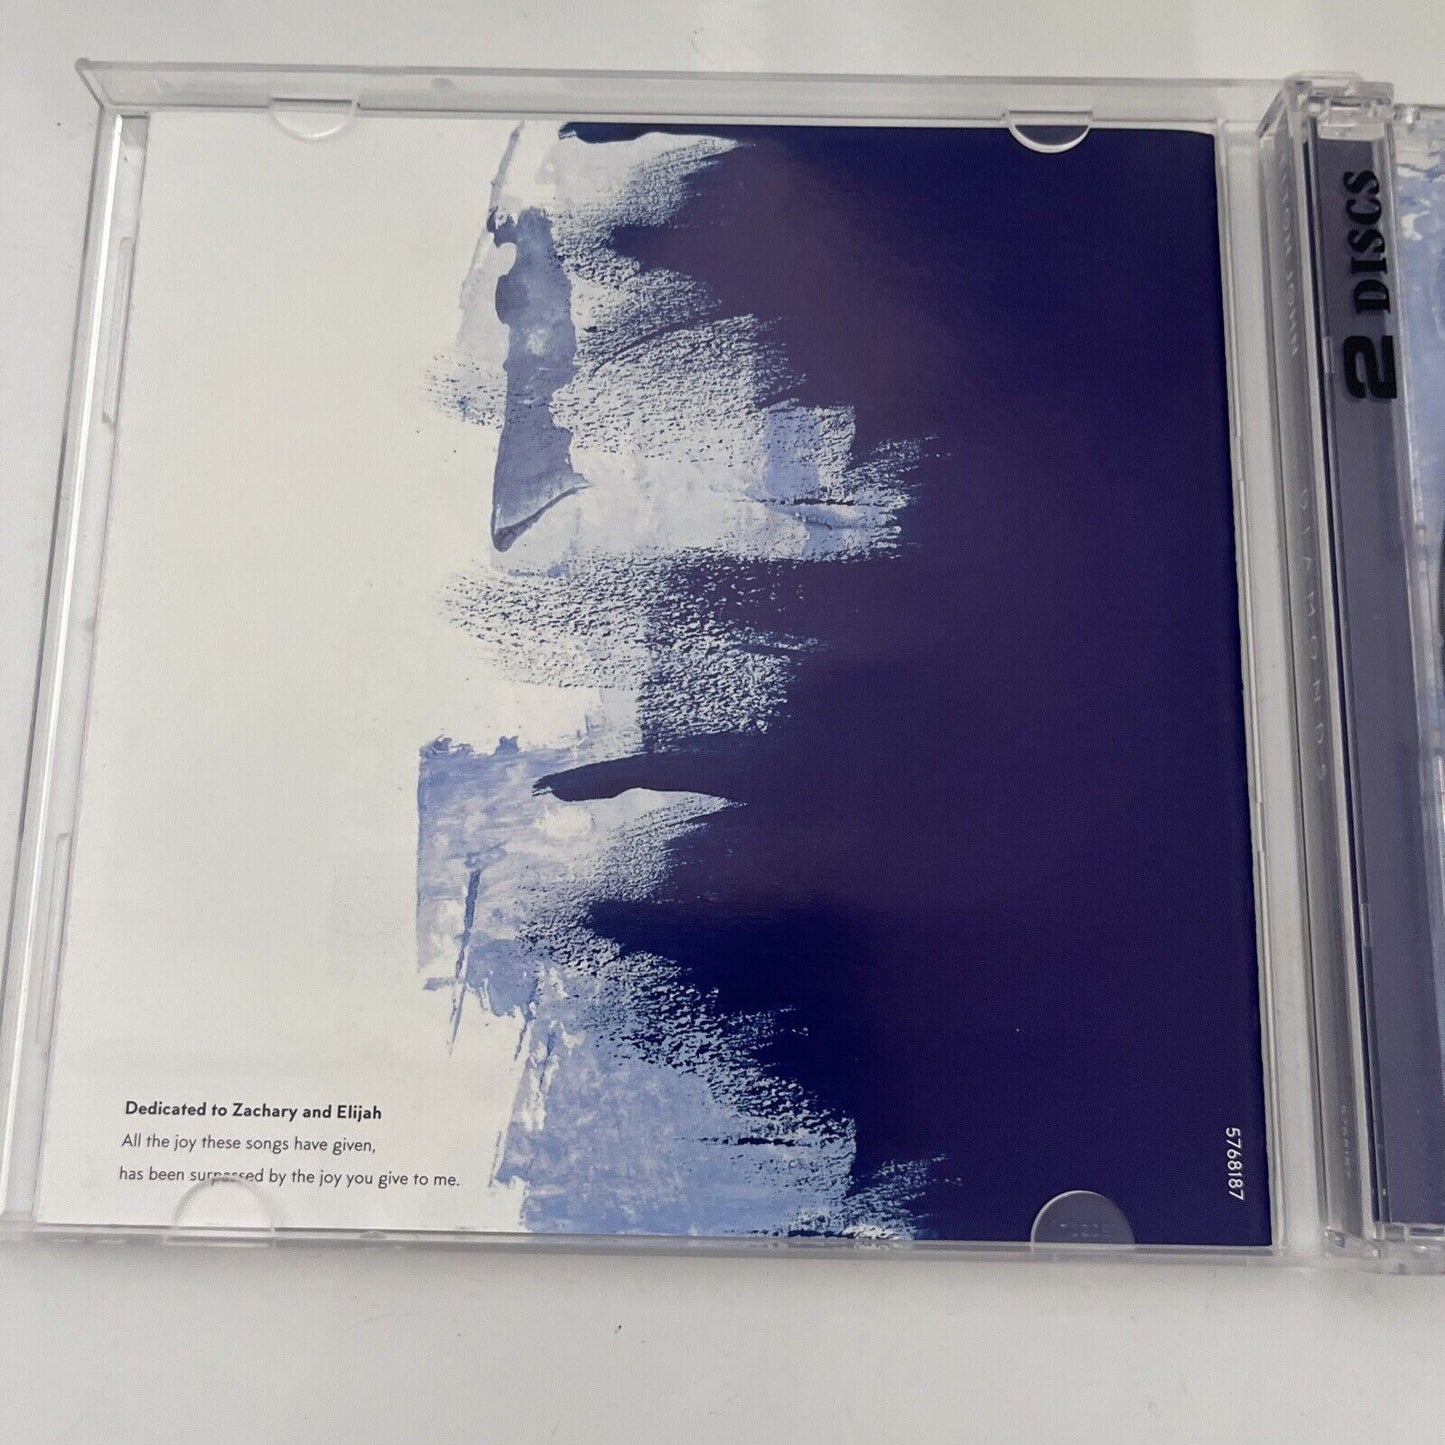 Elton John - Diamonds (CD, 2017, 2-Disc)